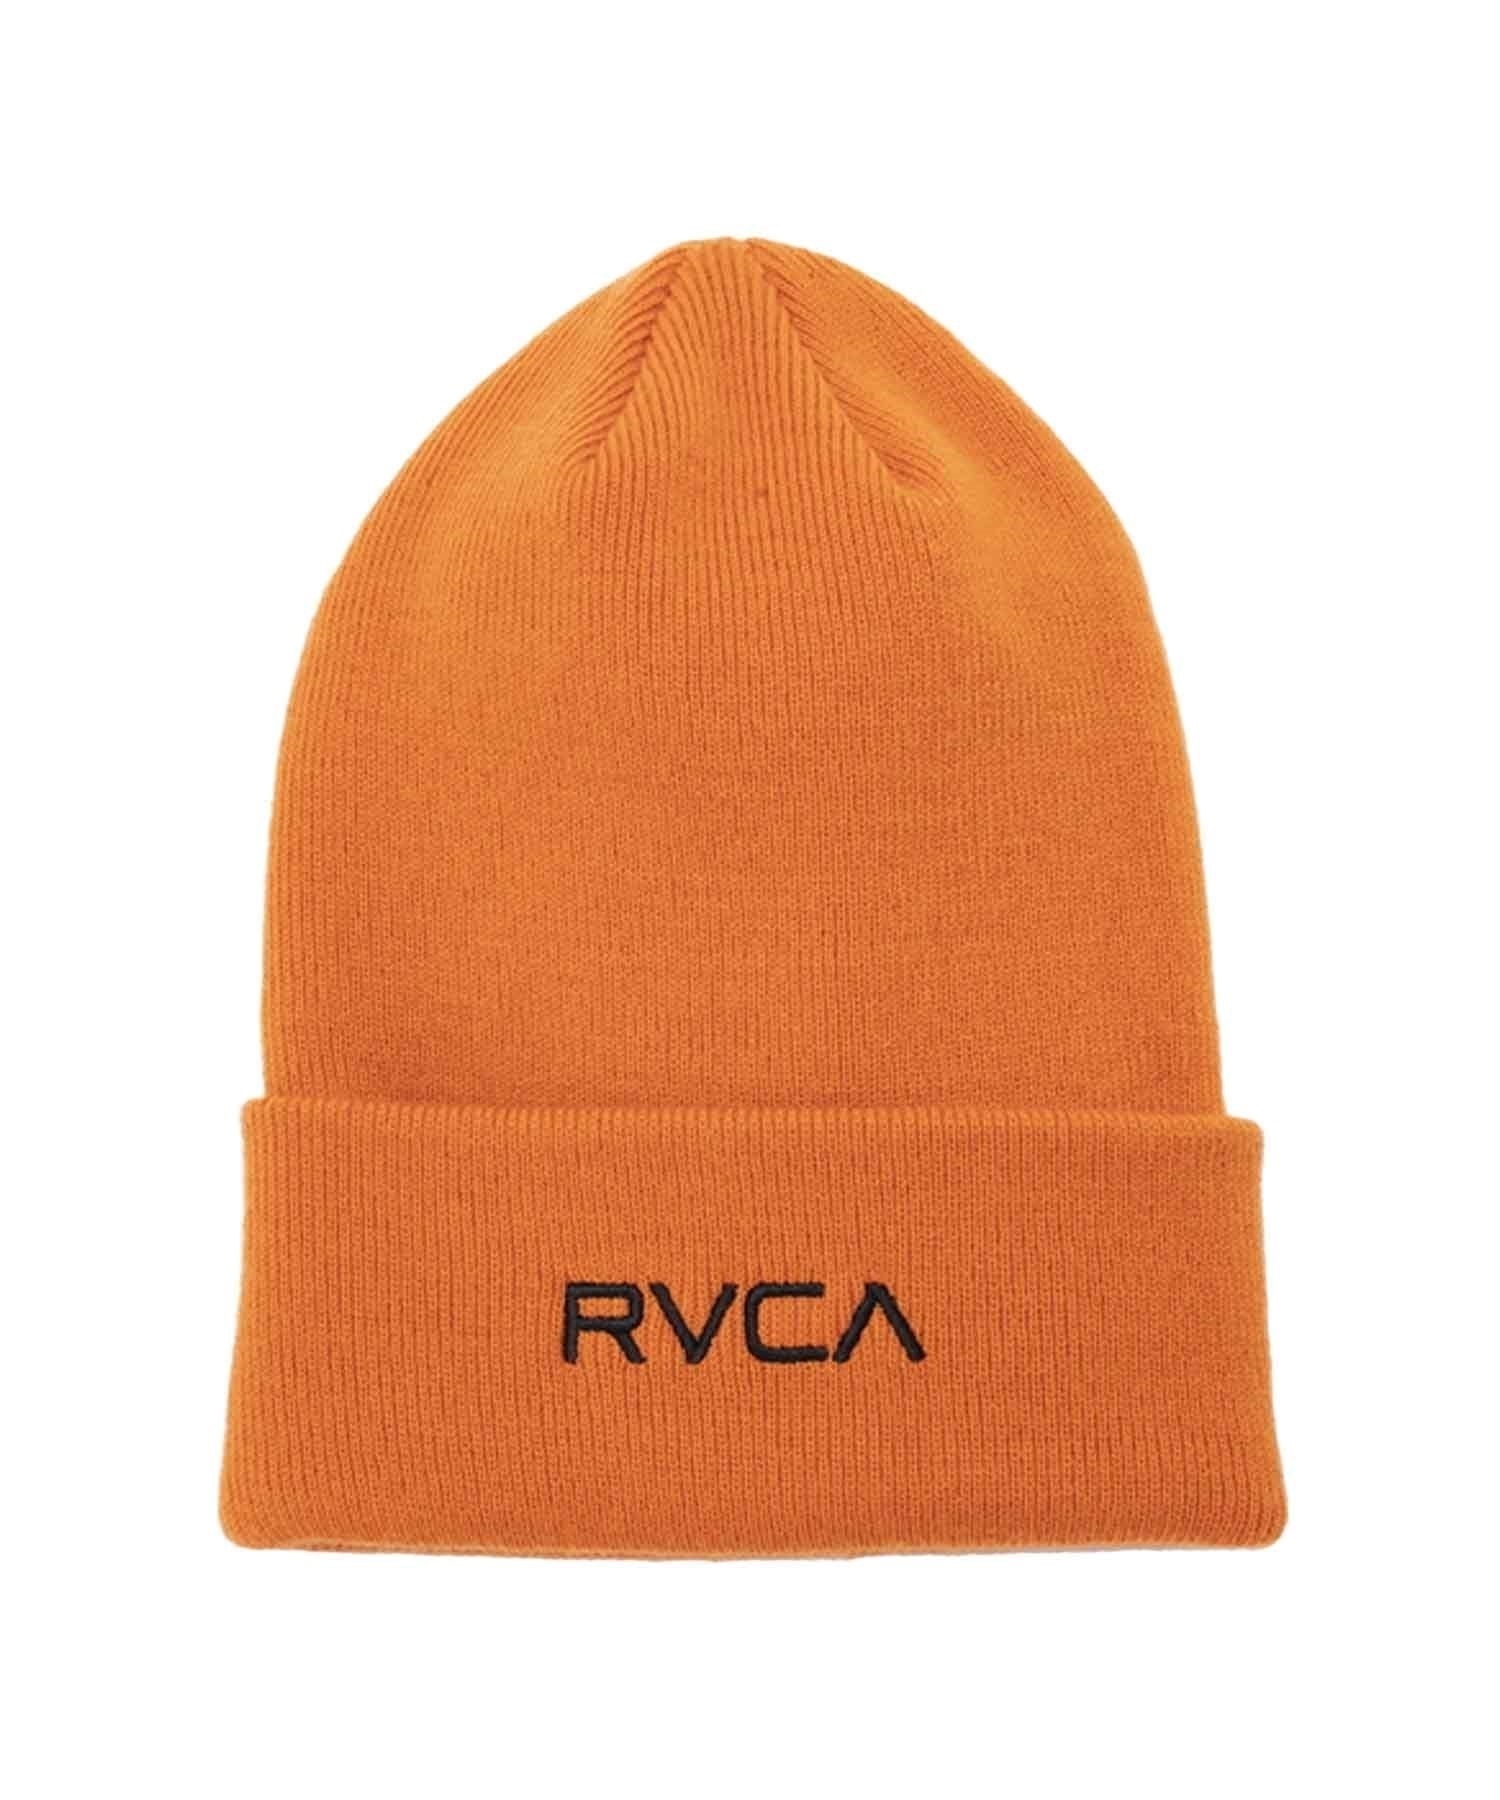 RVCA/ルーカ メンズ ビーニー ニット帽 ダブル DOUBLE FACE BEANIE BD042-965(CHIU-FREE)